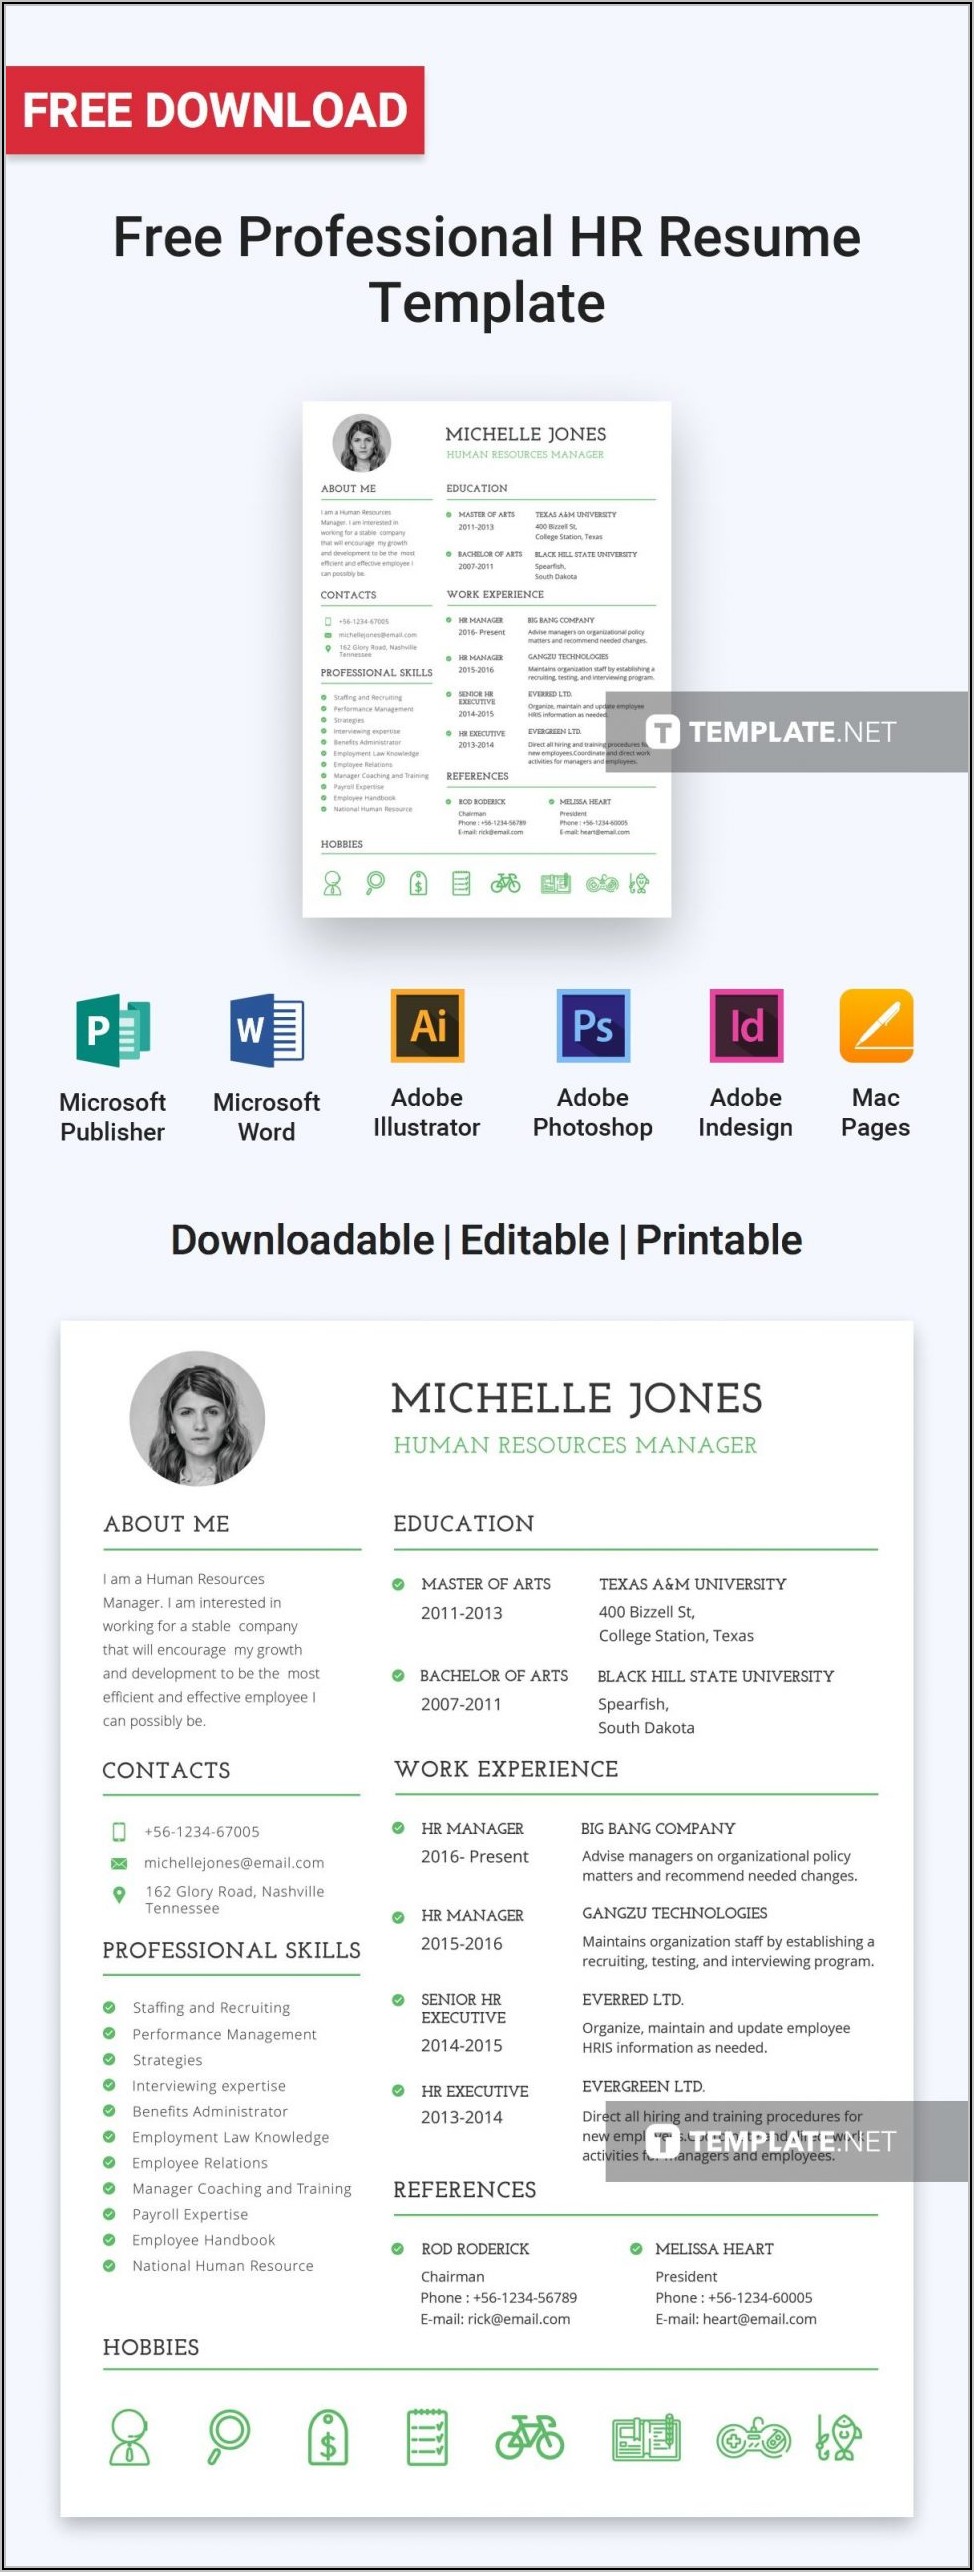 Free Professional Resume Template Microsoft Word